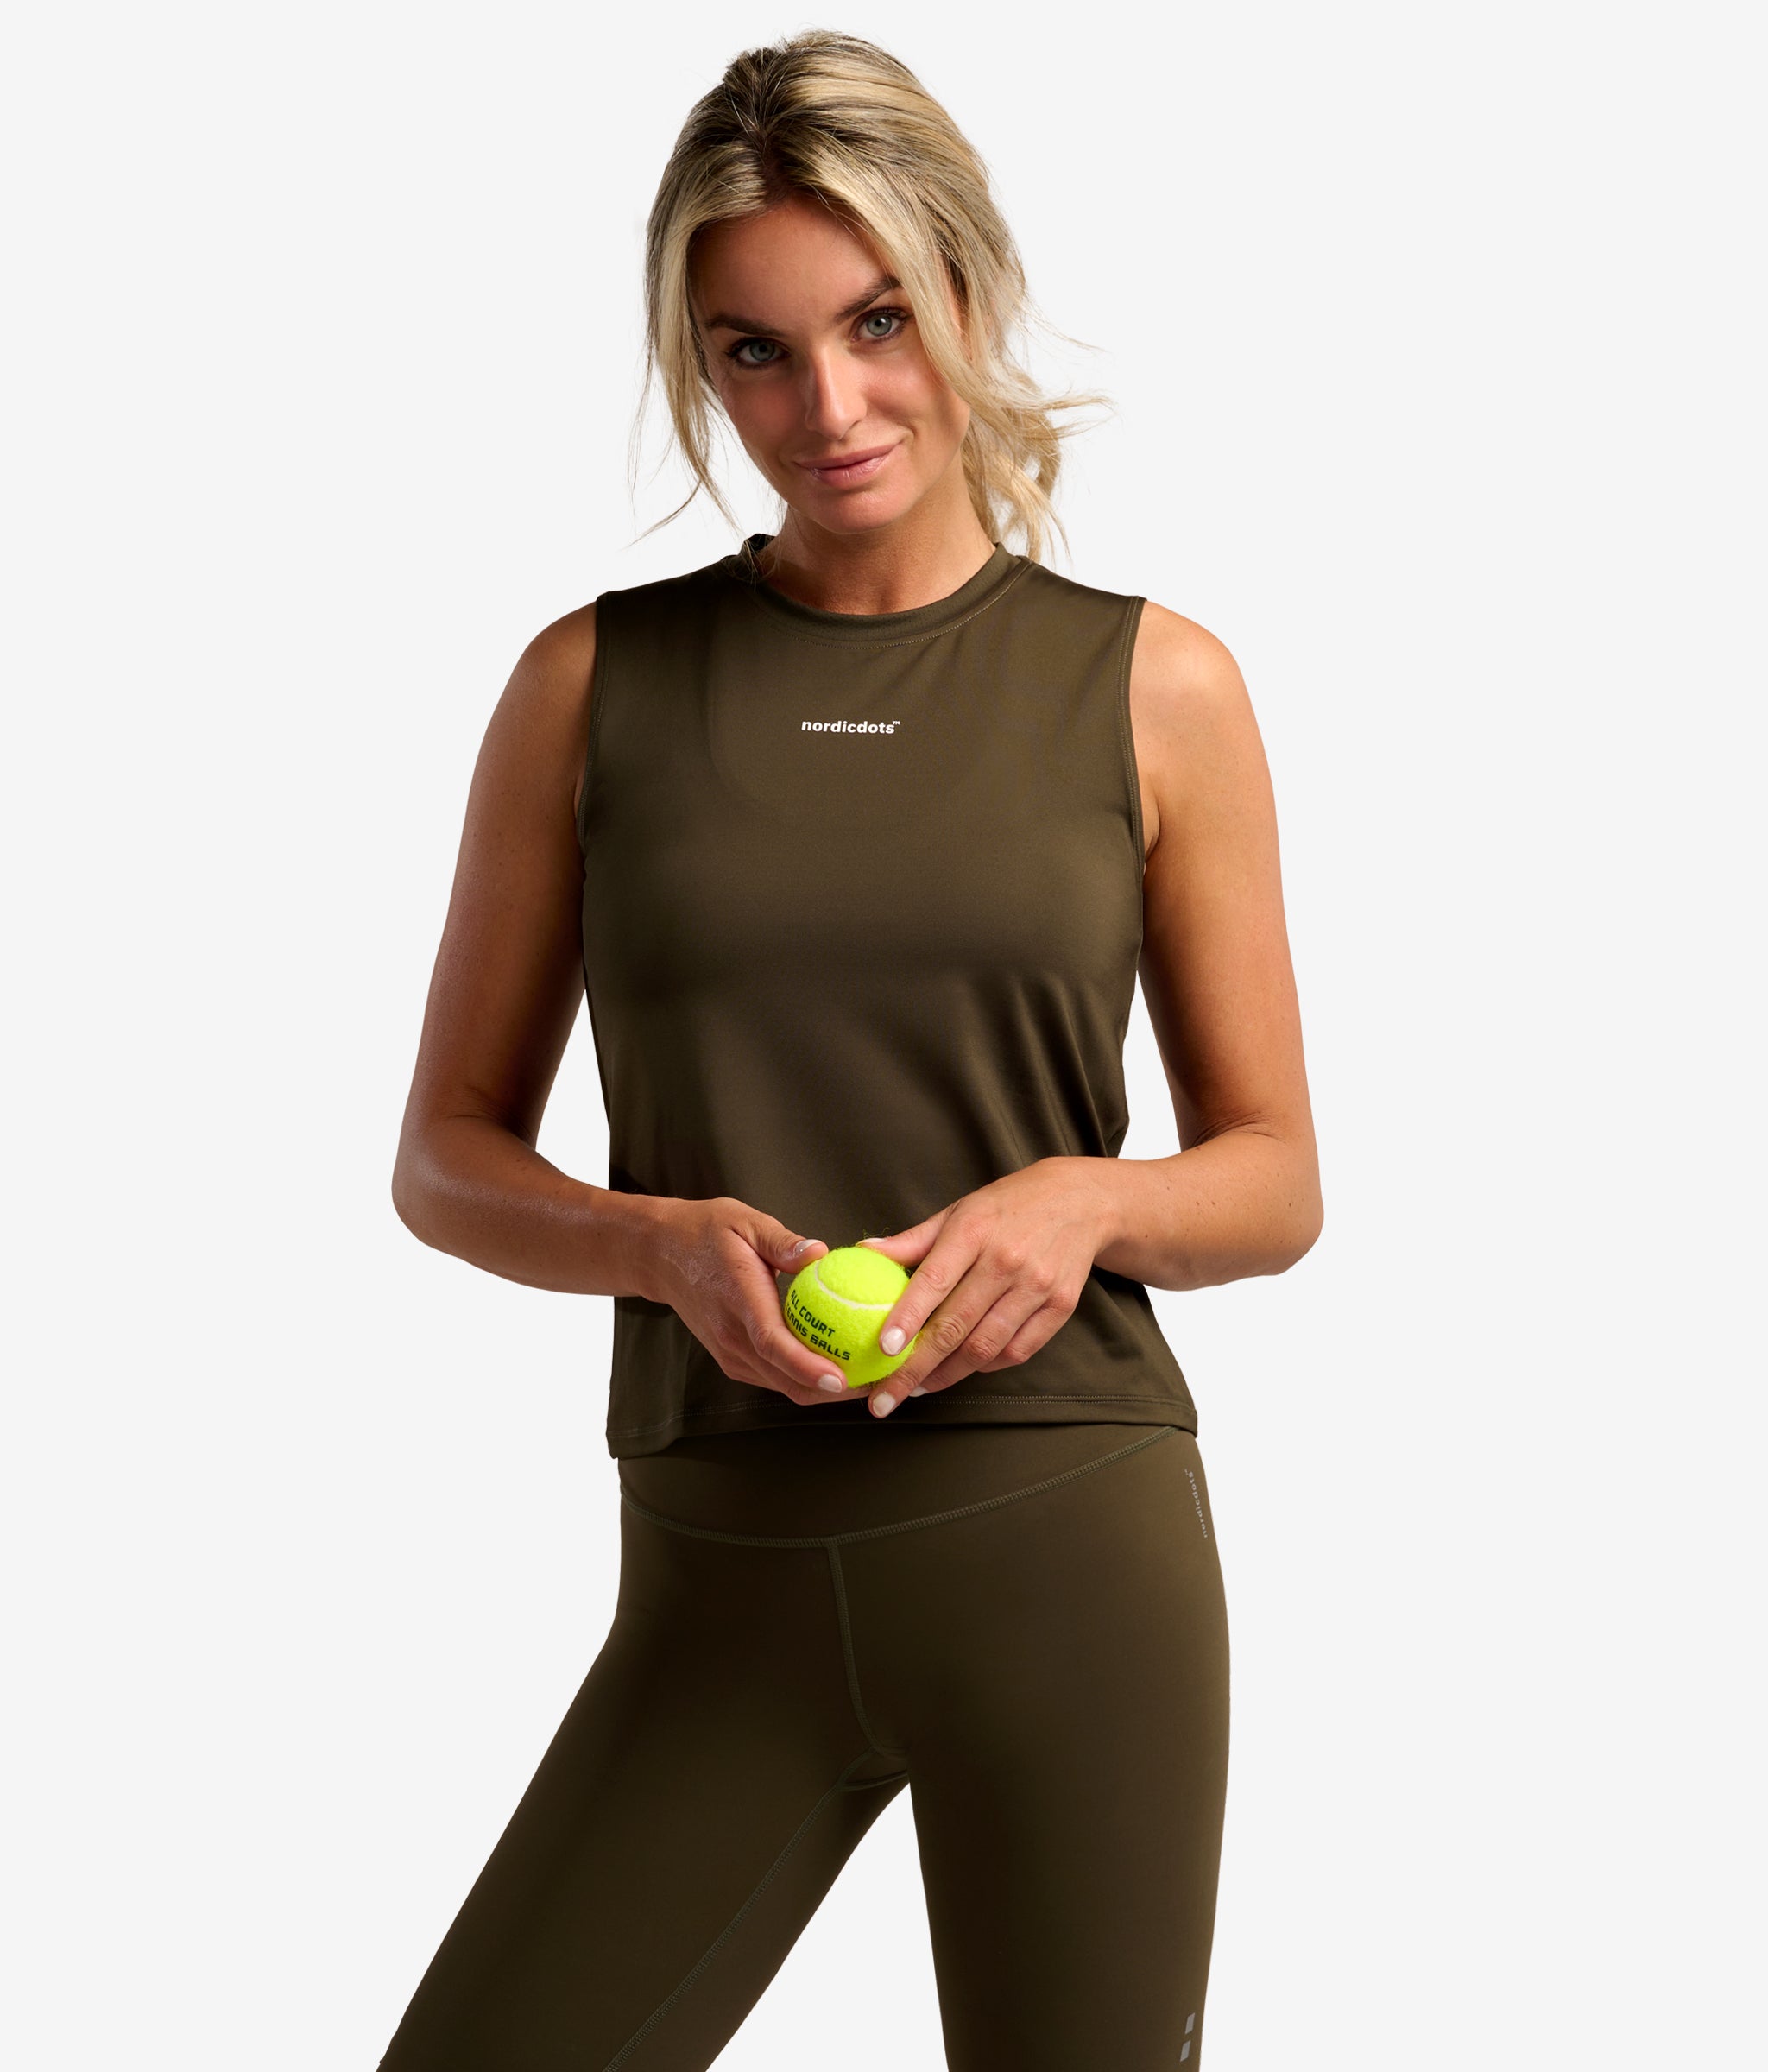 nordicdots tennis tank-top in olive color